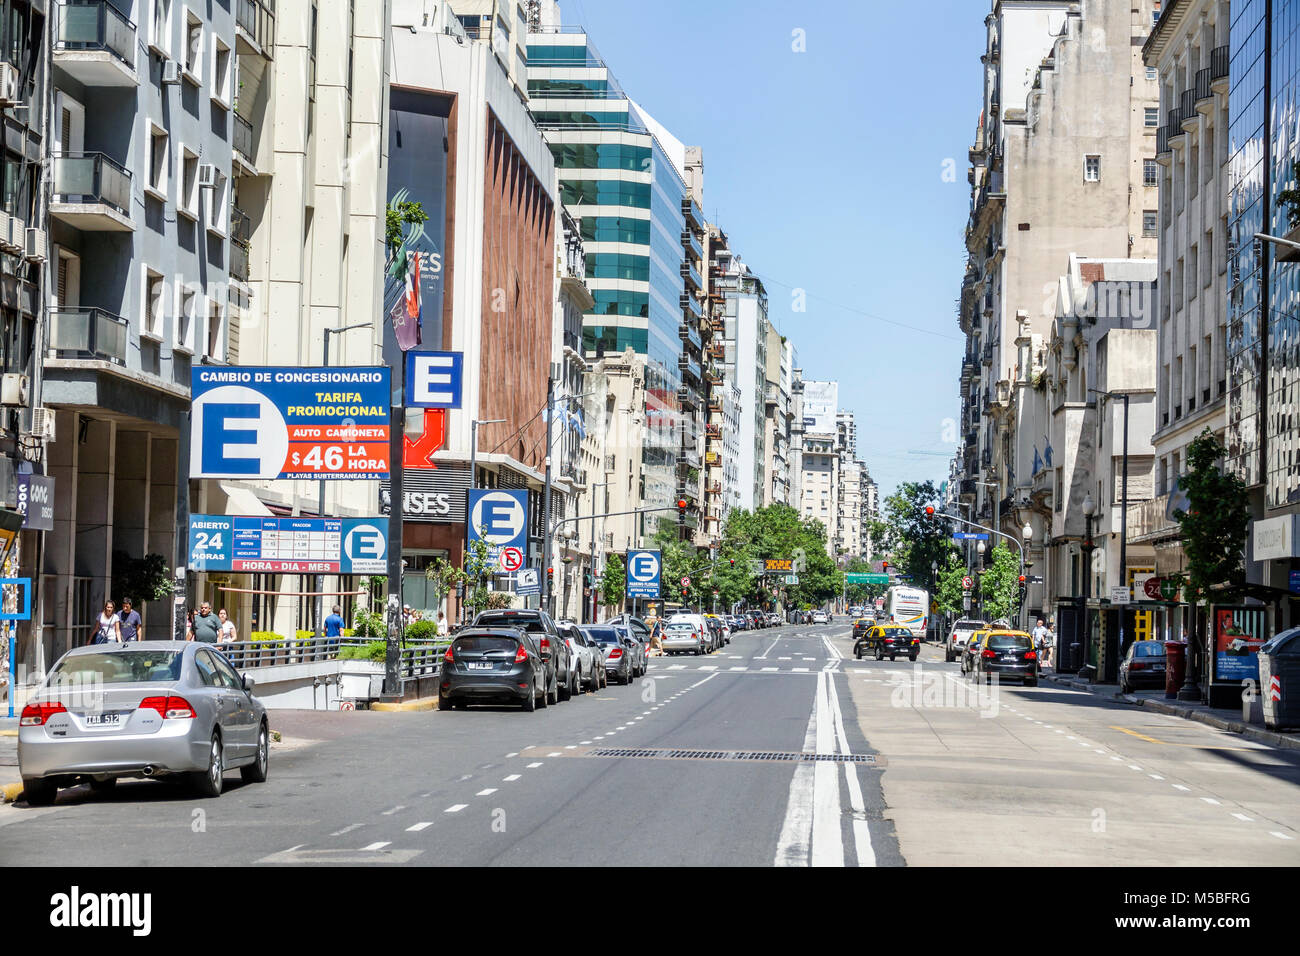 Buenos Aires Argentina,Avenida Cordoba,street view,parked cars,buildings,underground garage entrance,sign,ARG171128002 Stock Photo